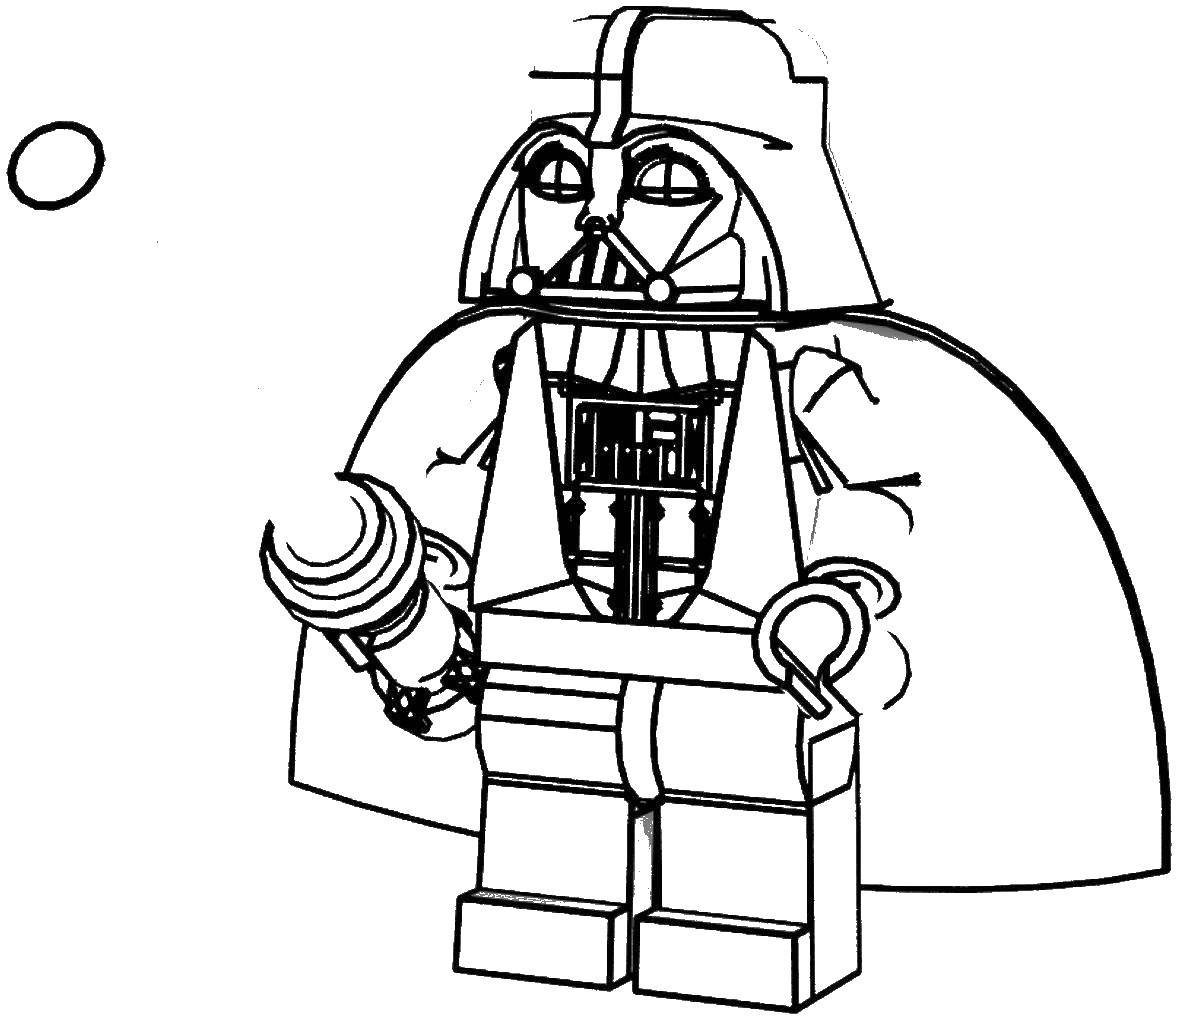 Coloring Darth Vader LEGO. Category LEGO. Tags:  Darth Vader, star wars, LEGO.